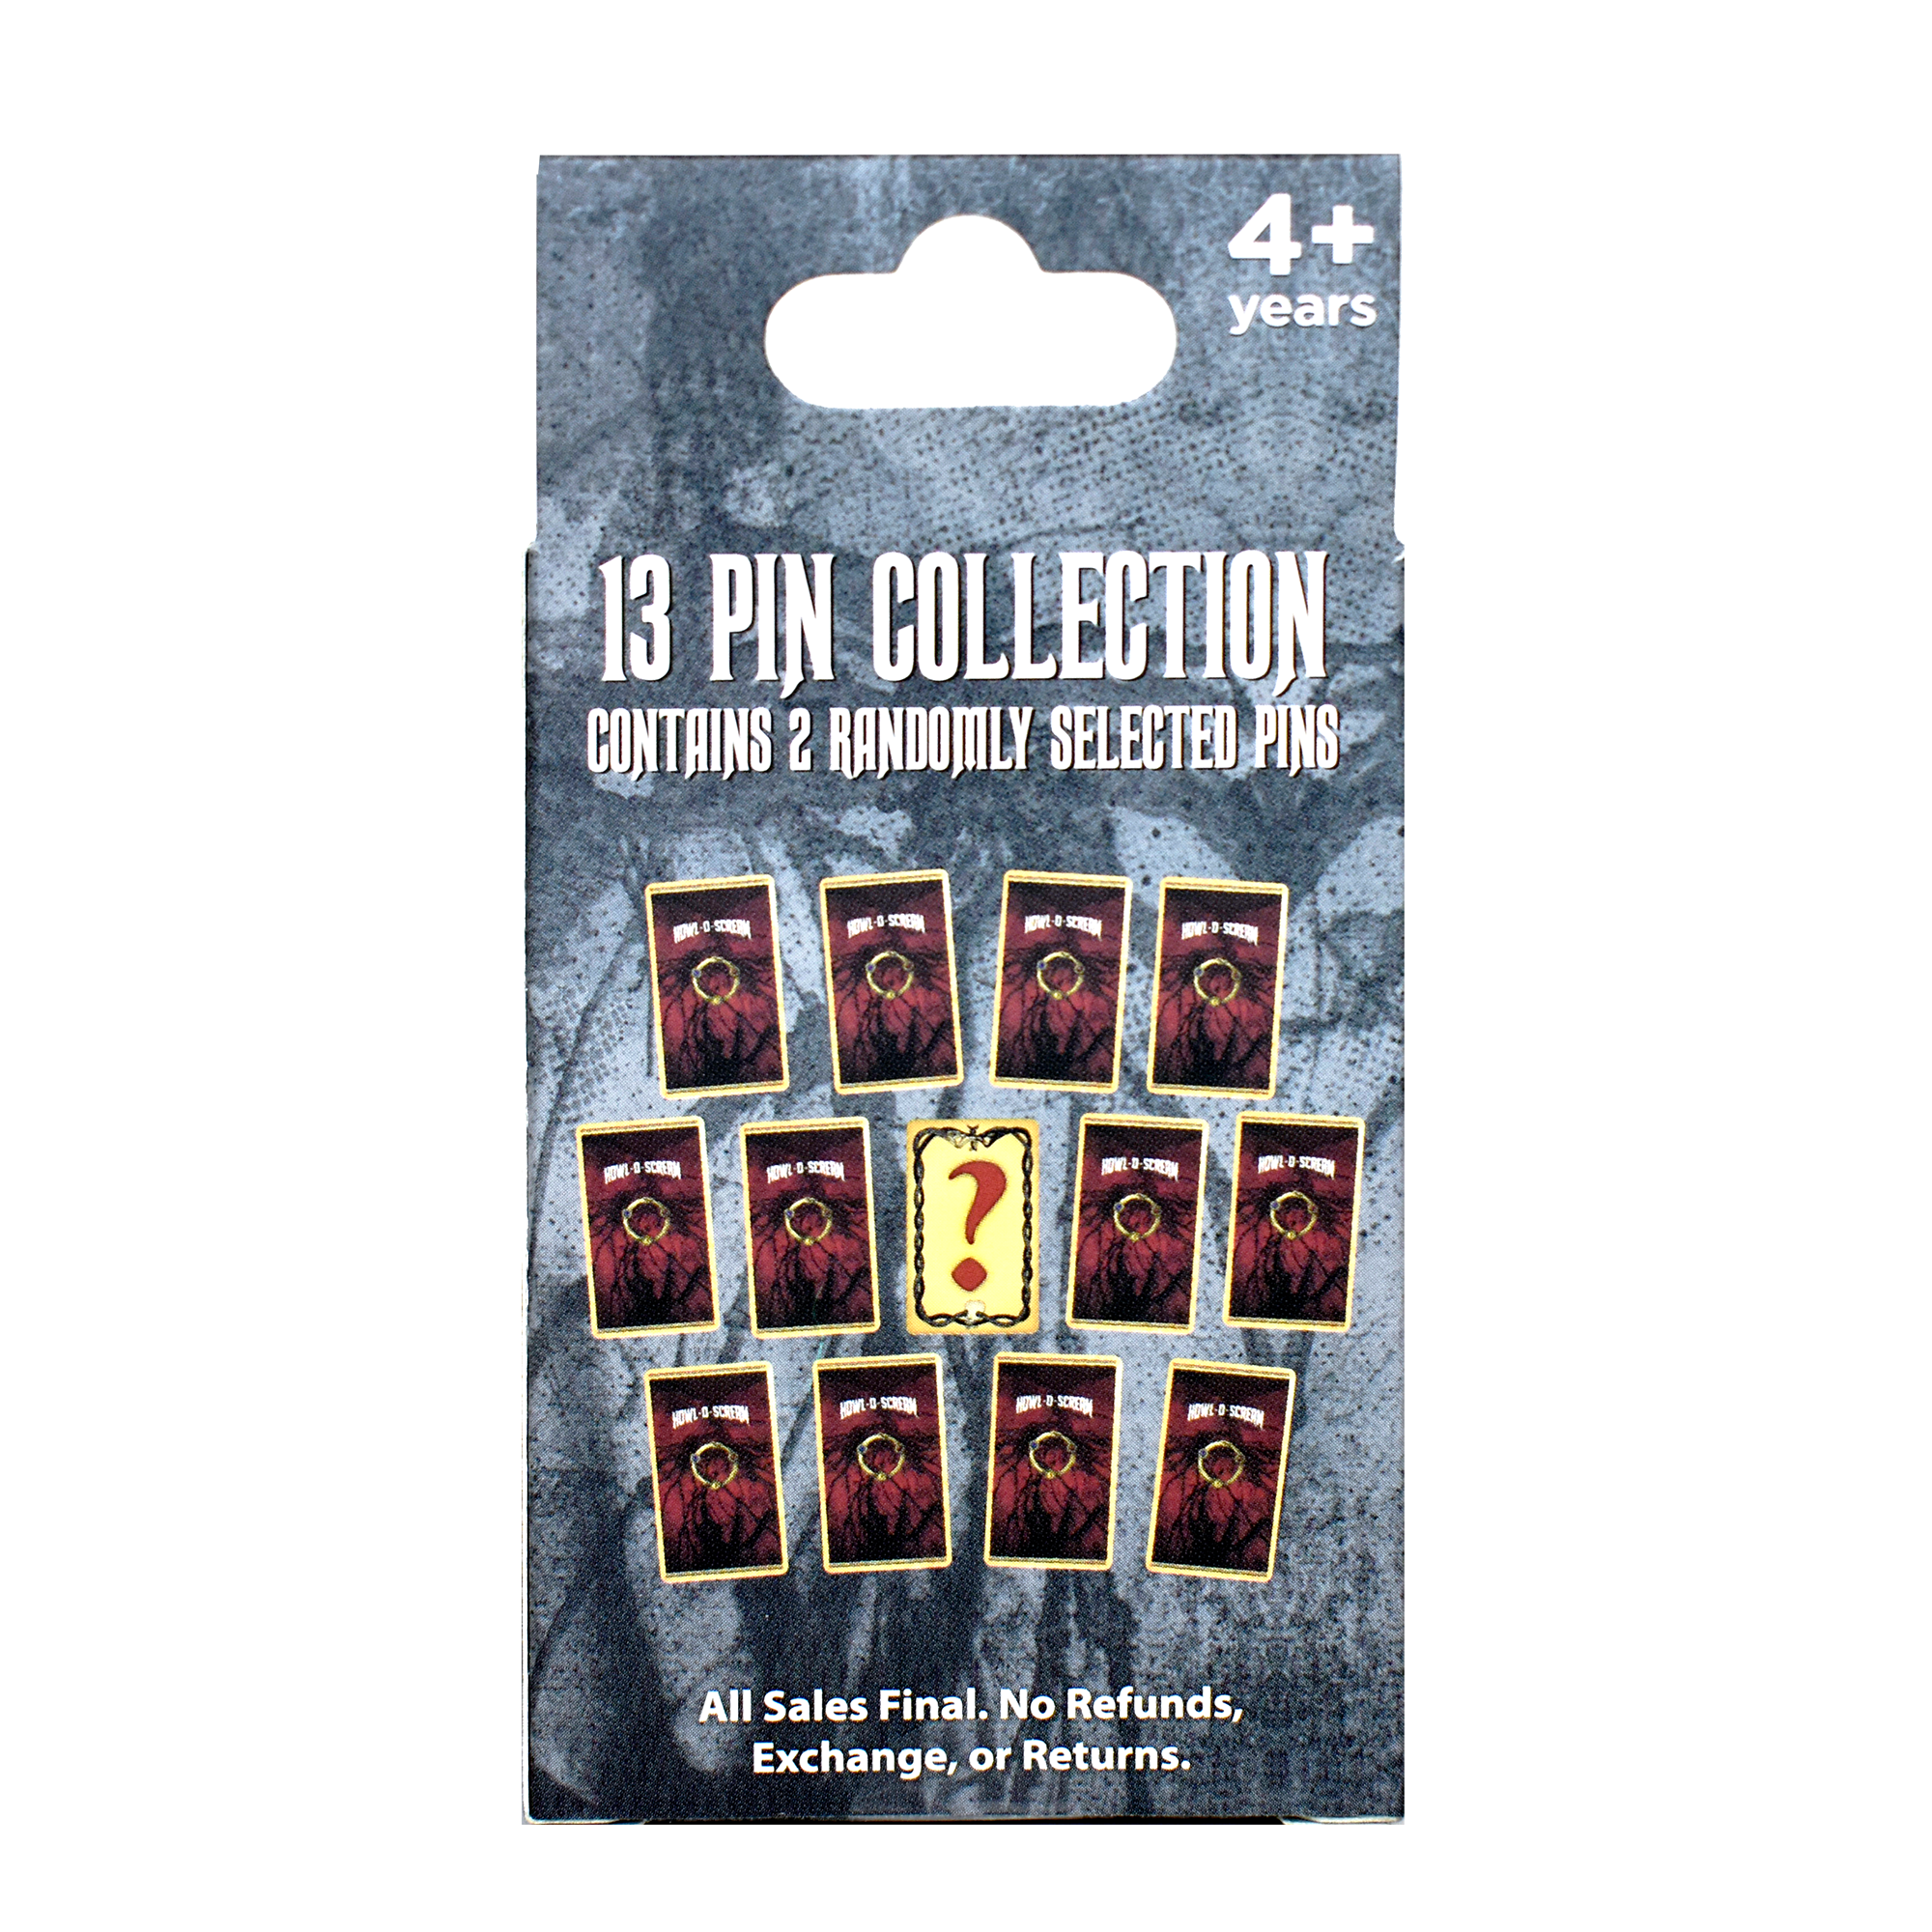 Pin on selected pins